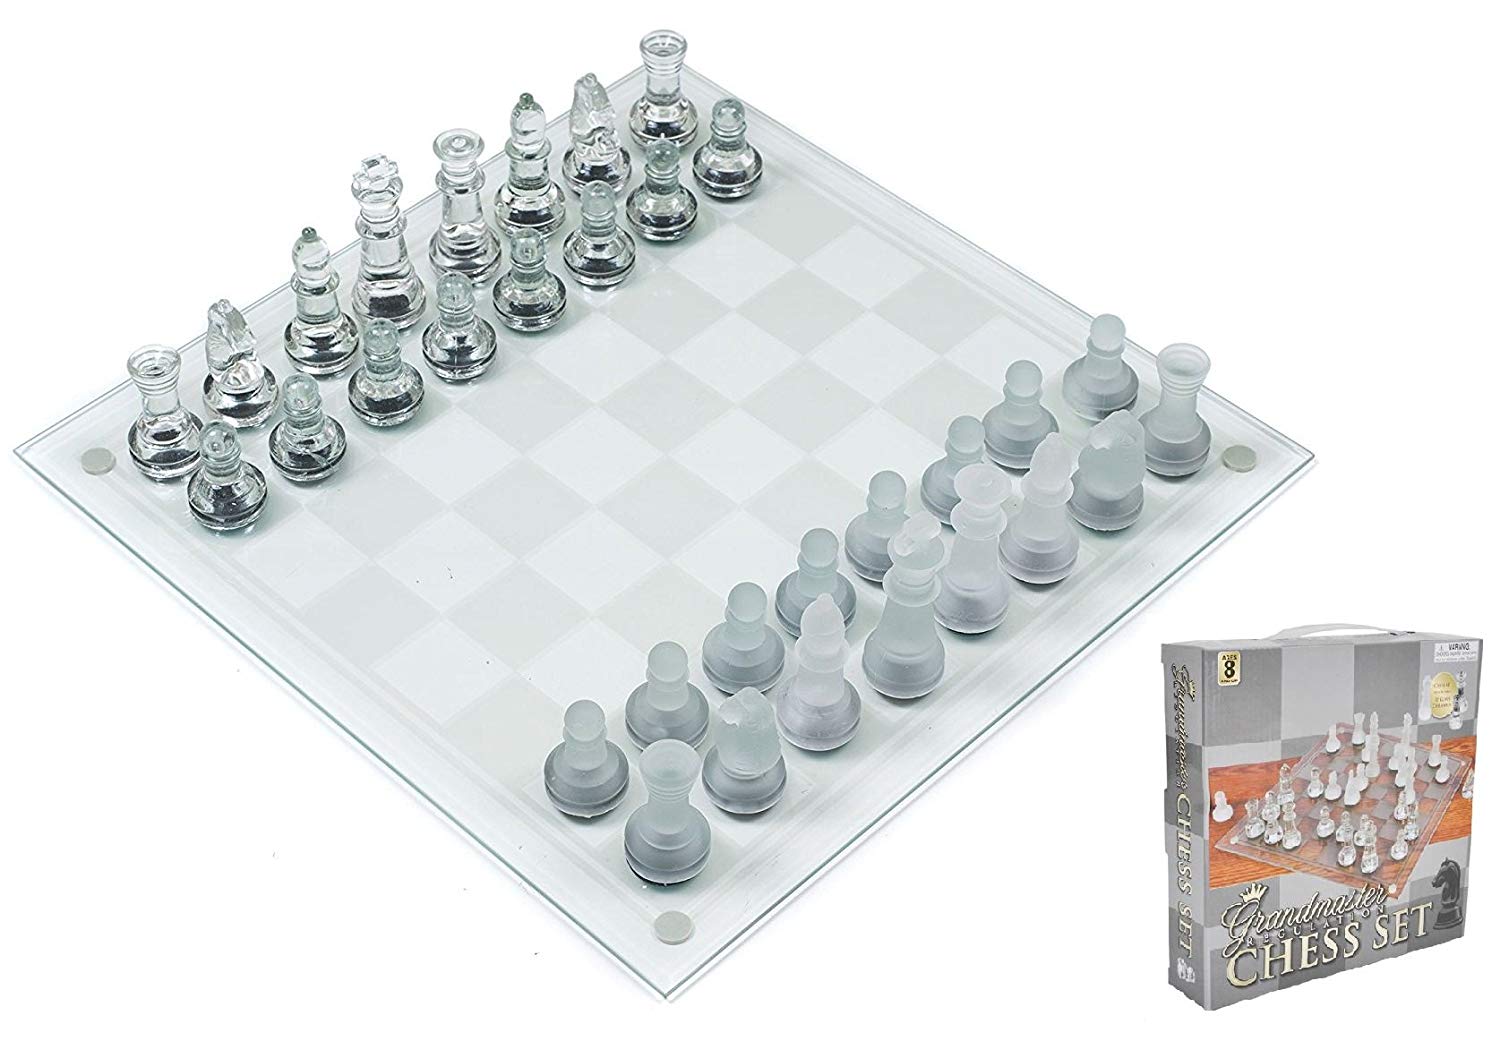 Play Kreative Glass Chess Game Set